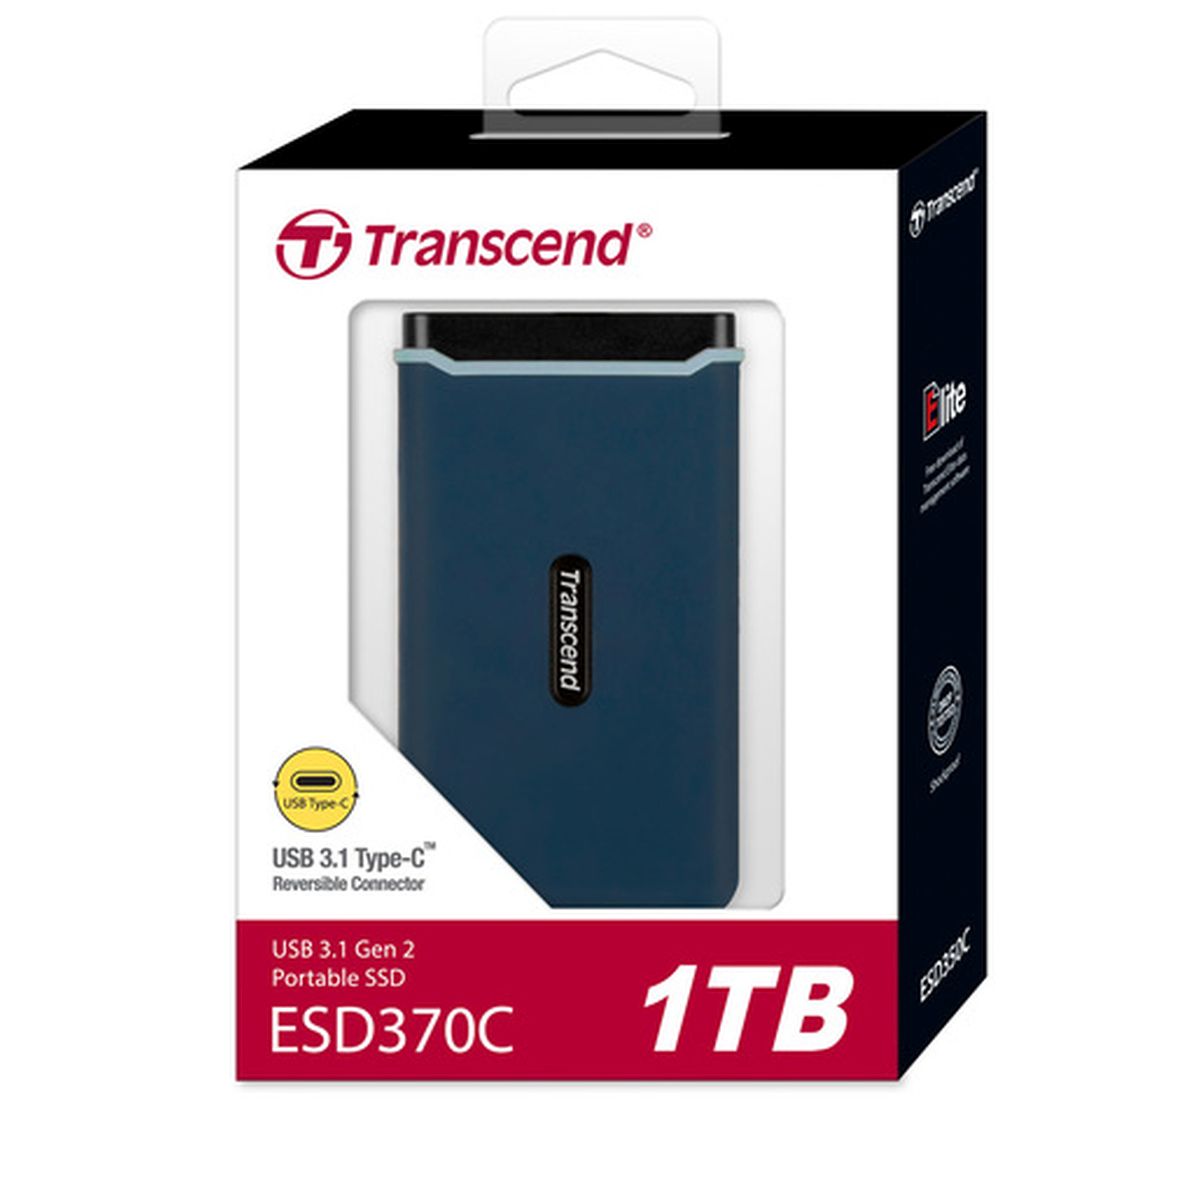 Transcend ESD370C Portable SSD 1 TB, externe SSD Festplatte